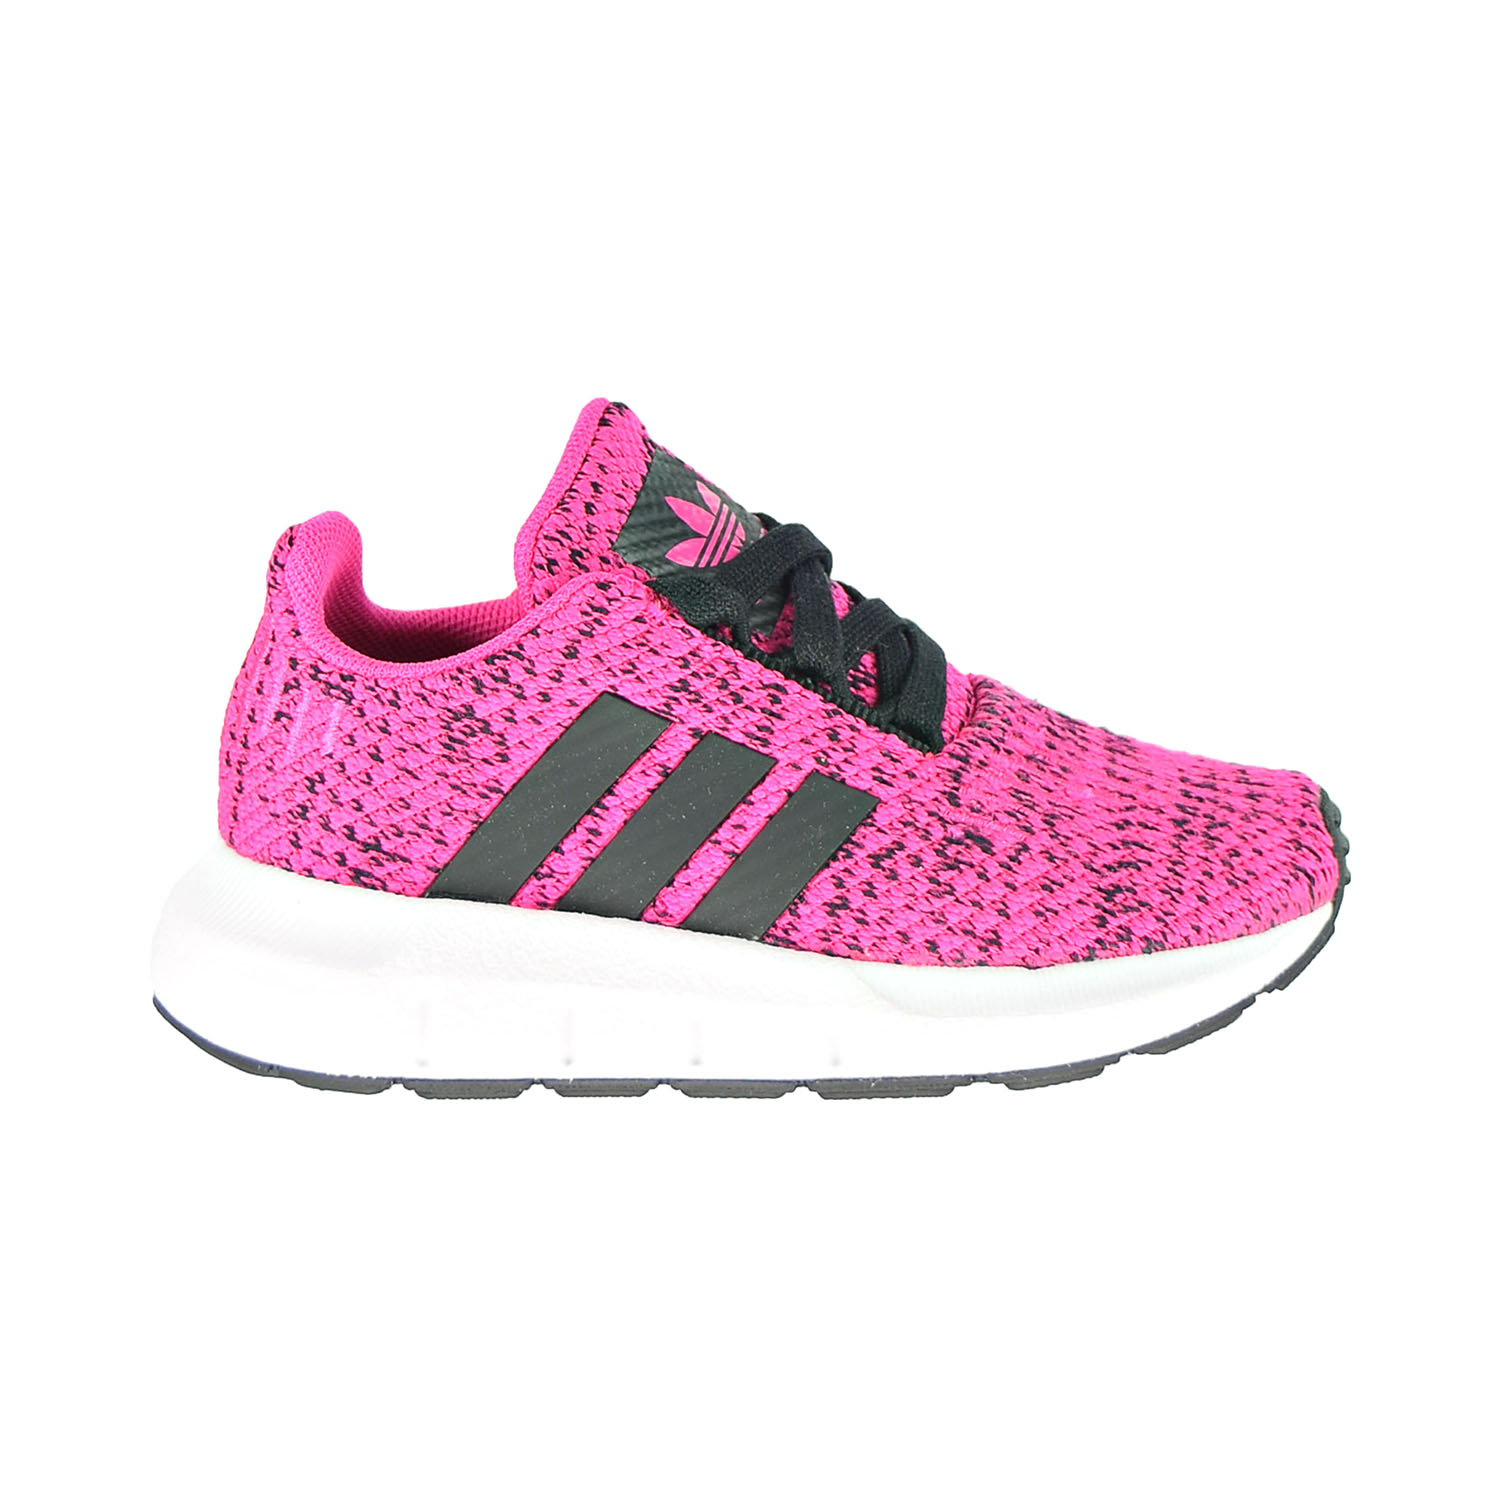 adidas swift run pink and black